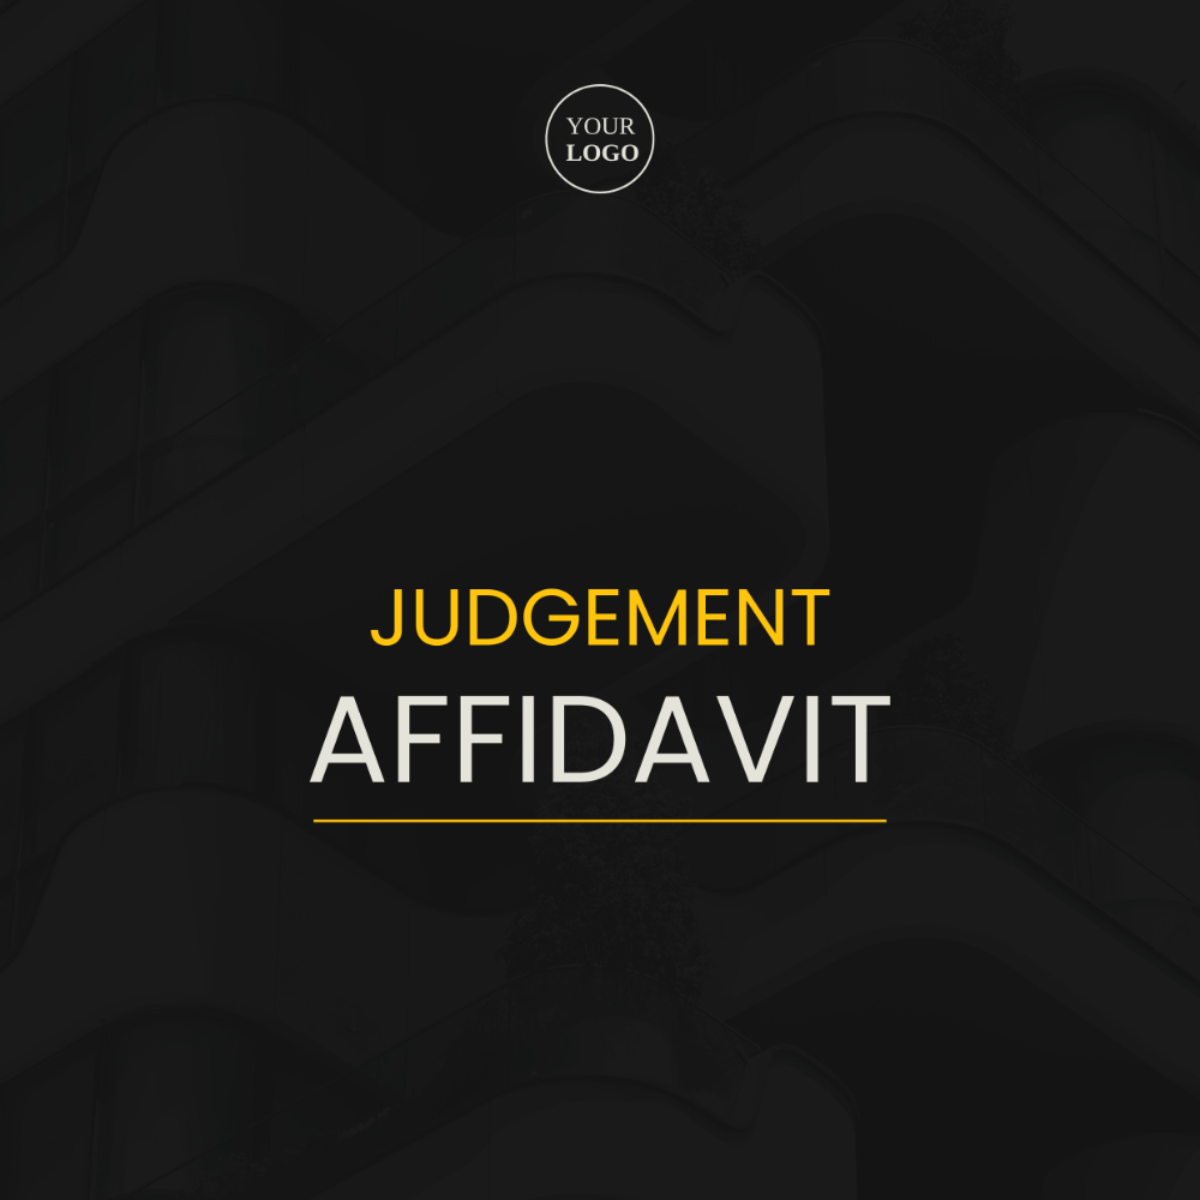 Judgement Affidavit Template